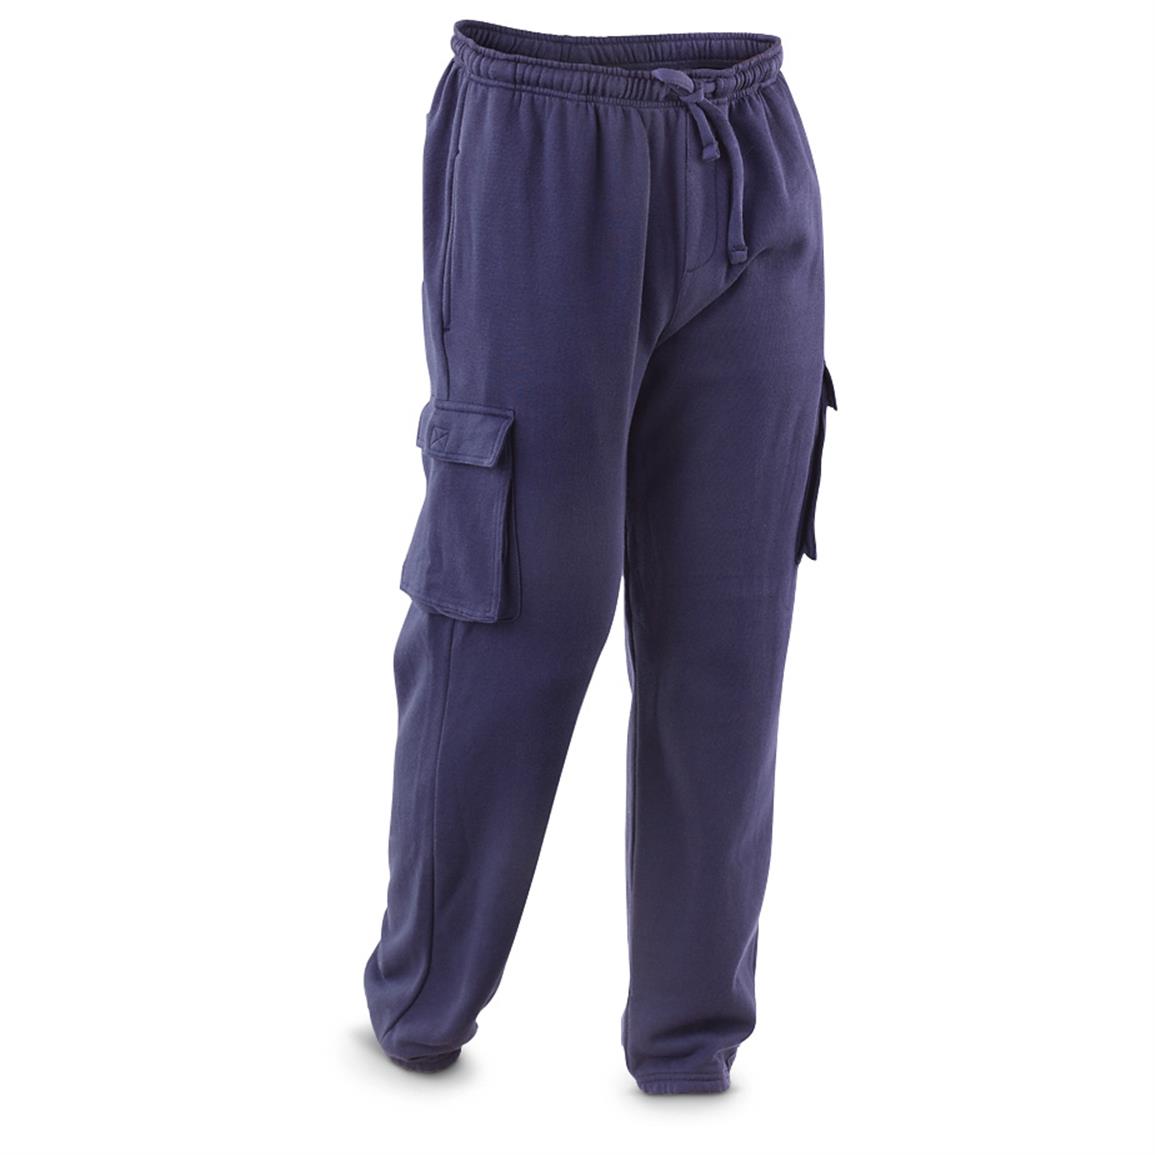 Rio Men's Fleece Cargo Pants, 2 Pack - 609317, at Sportsman's Guide